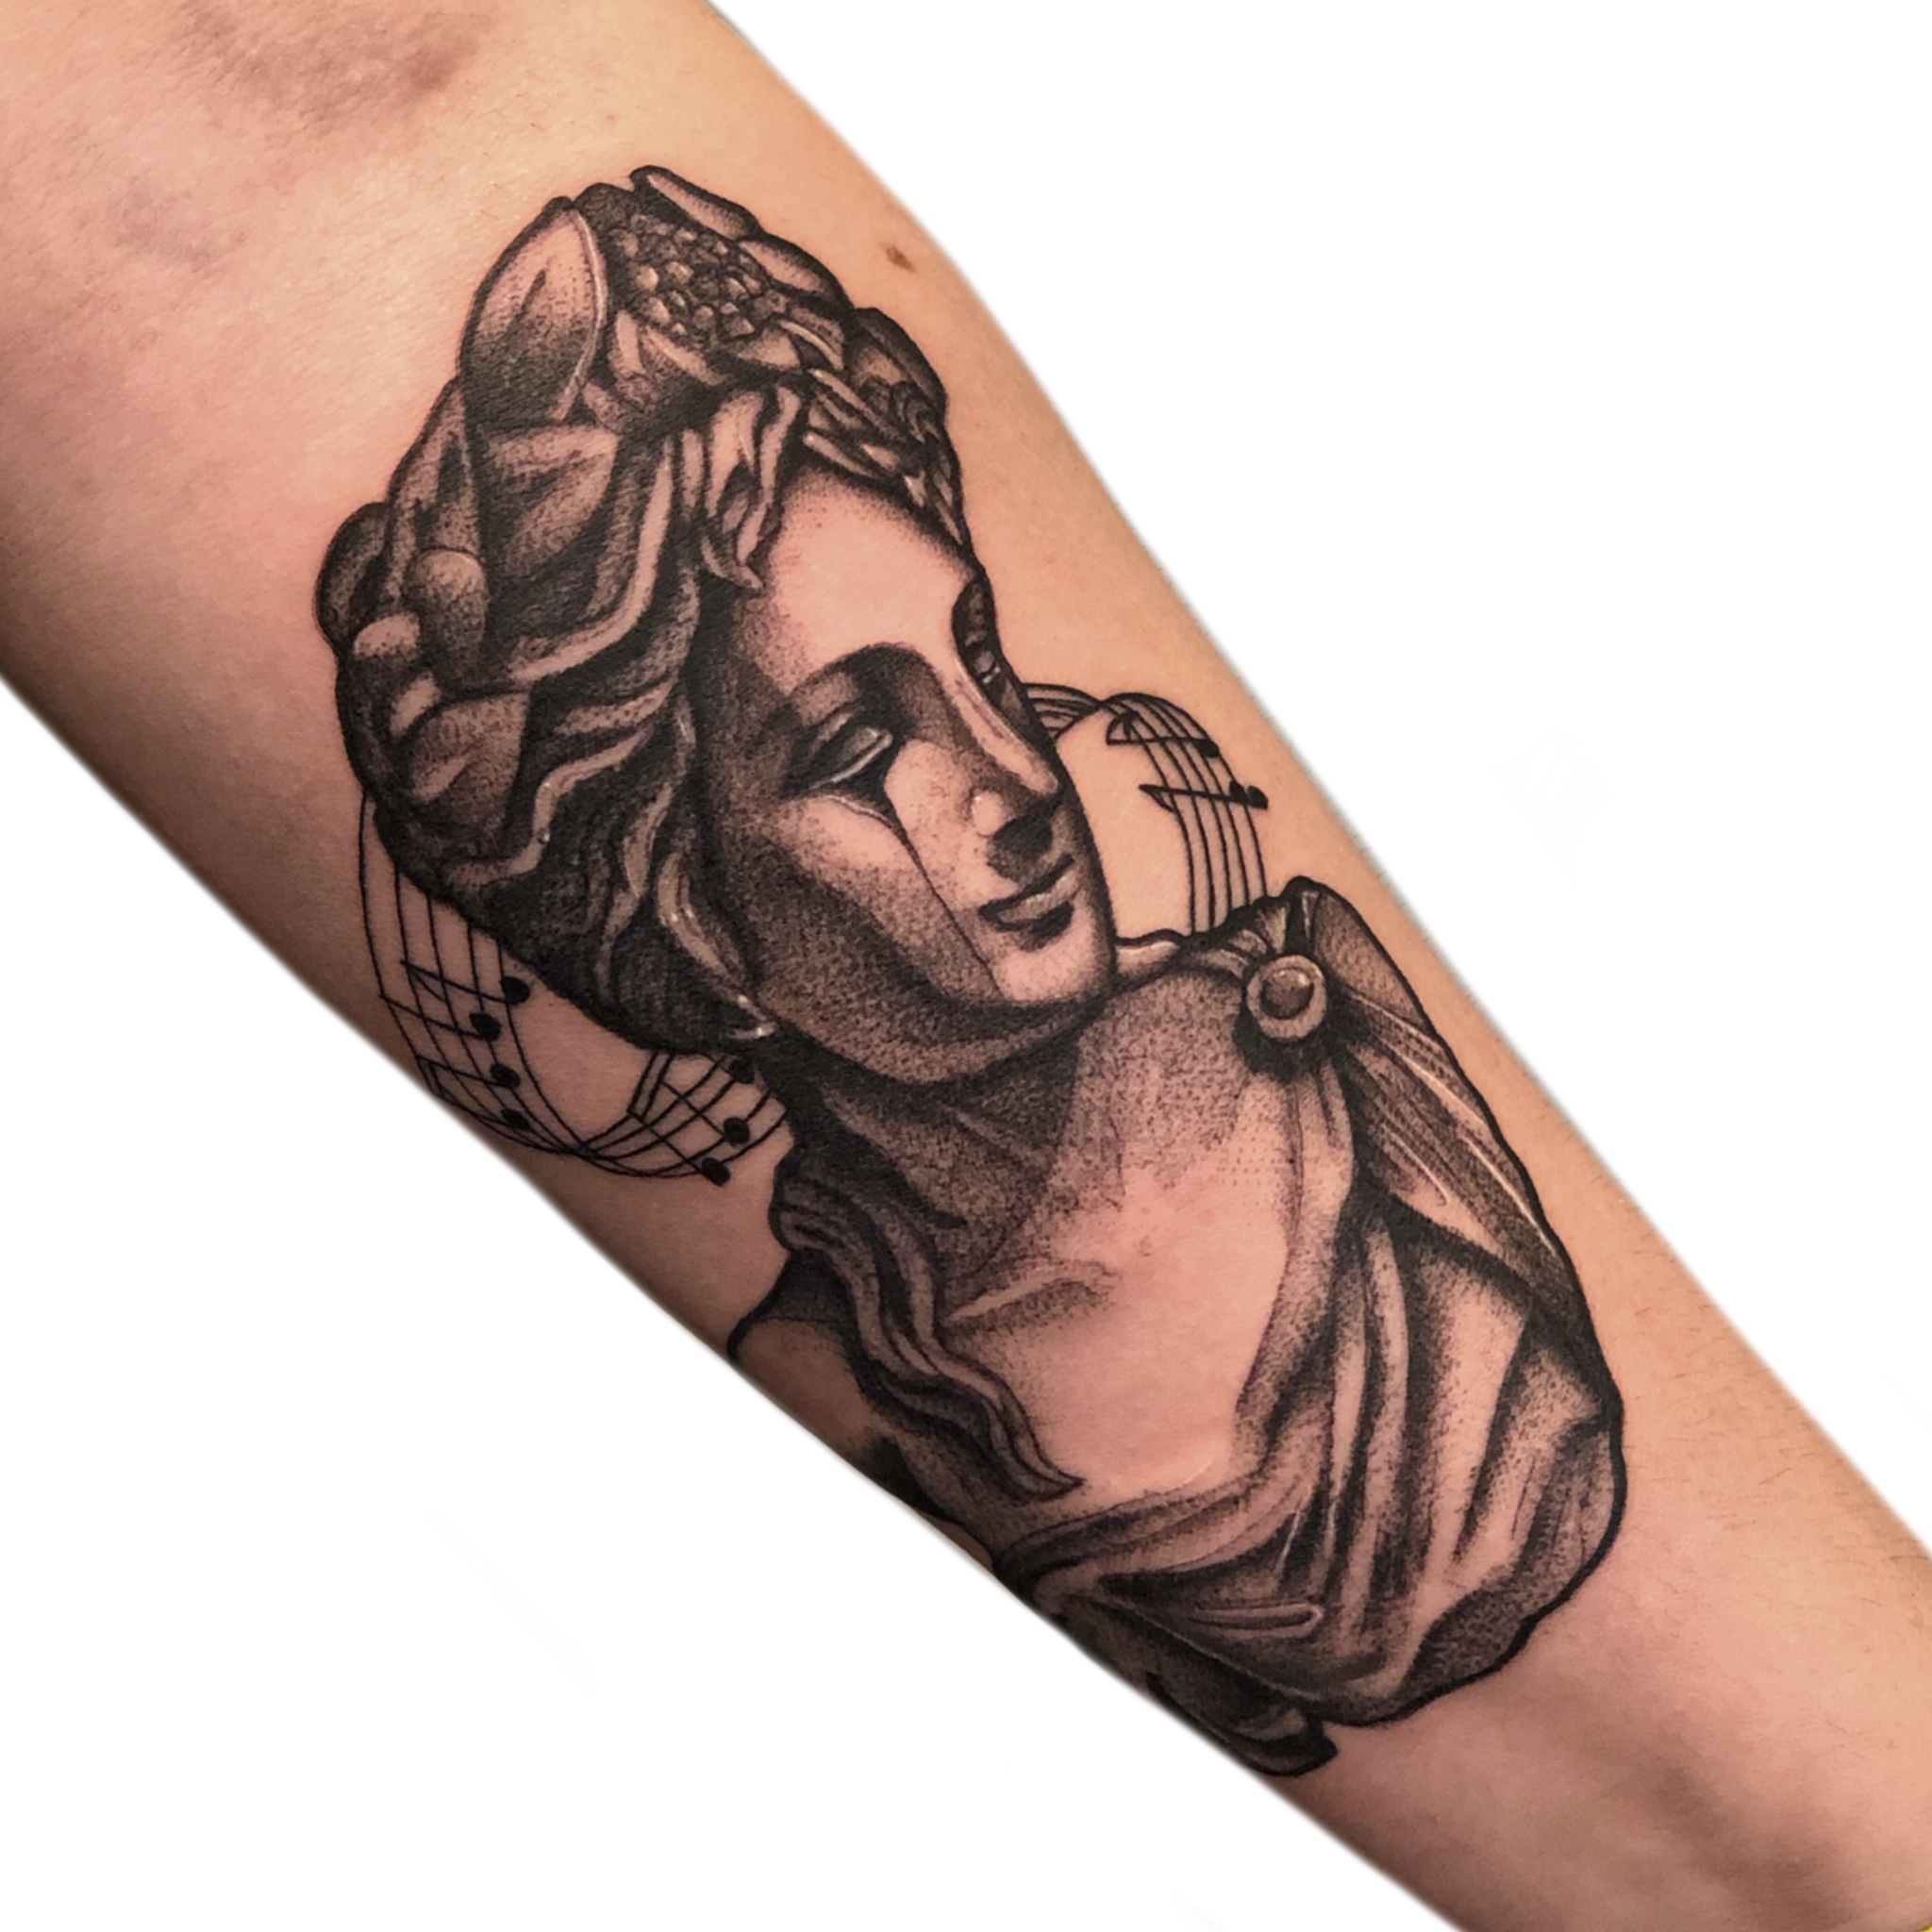 Greek mythology tattoos - Tattoo Designs for Women